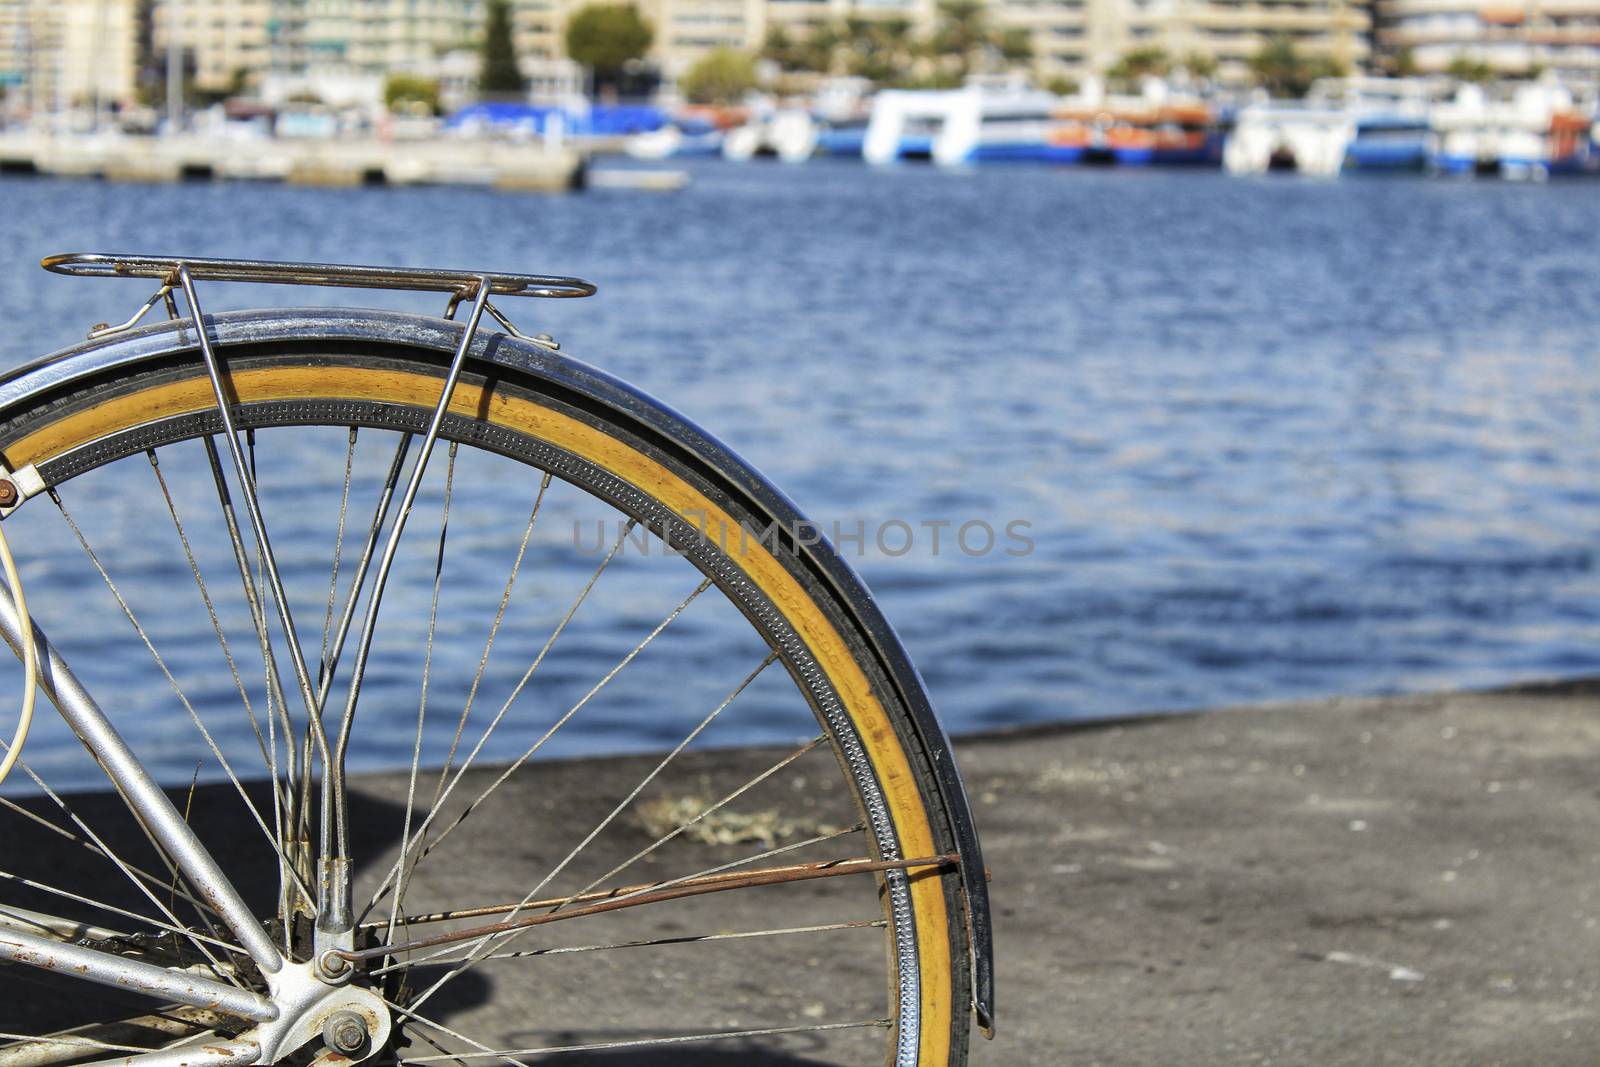 Vintage bicycle by the sea in Spain by soniabonet